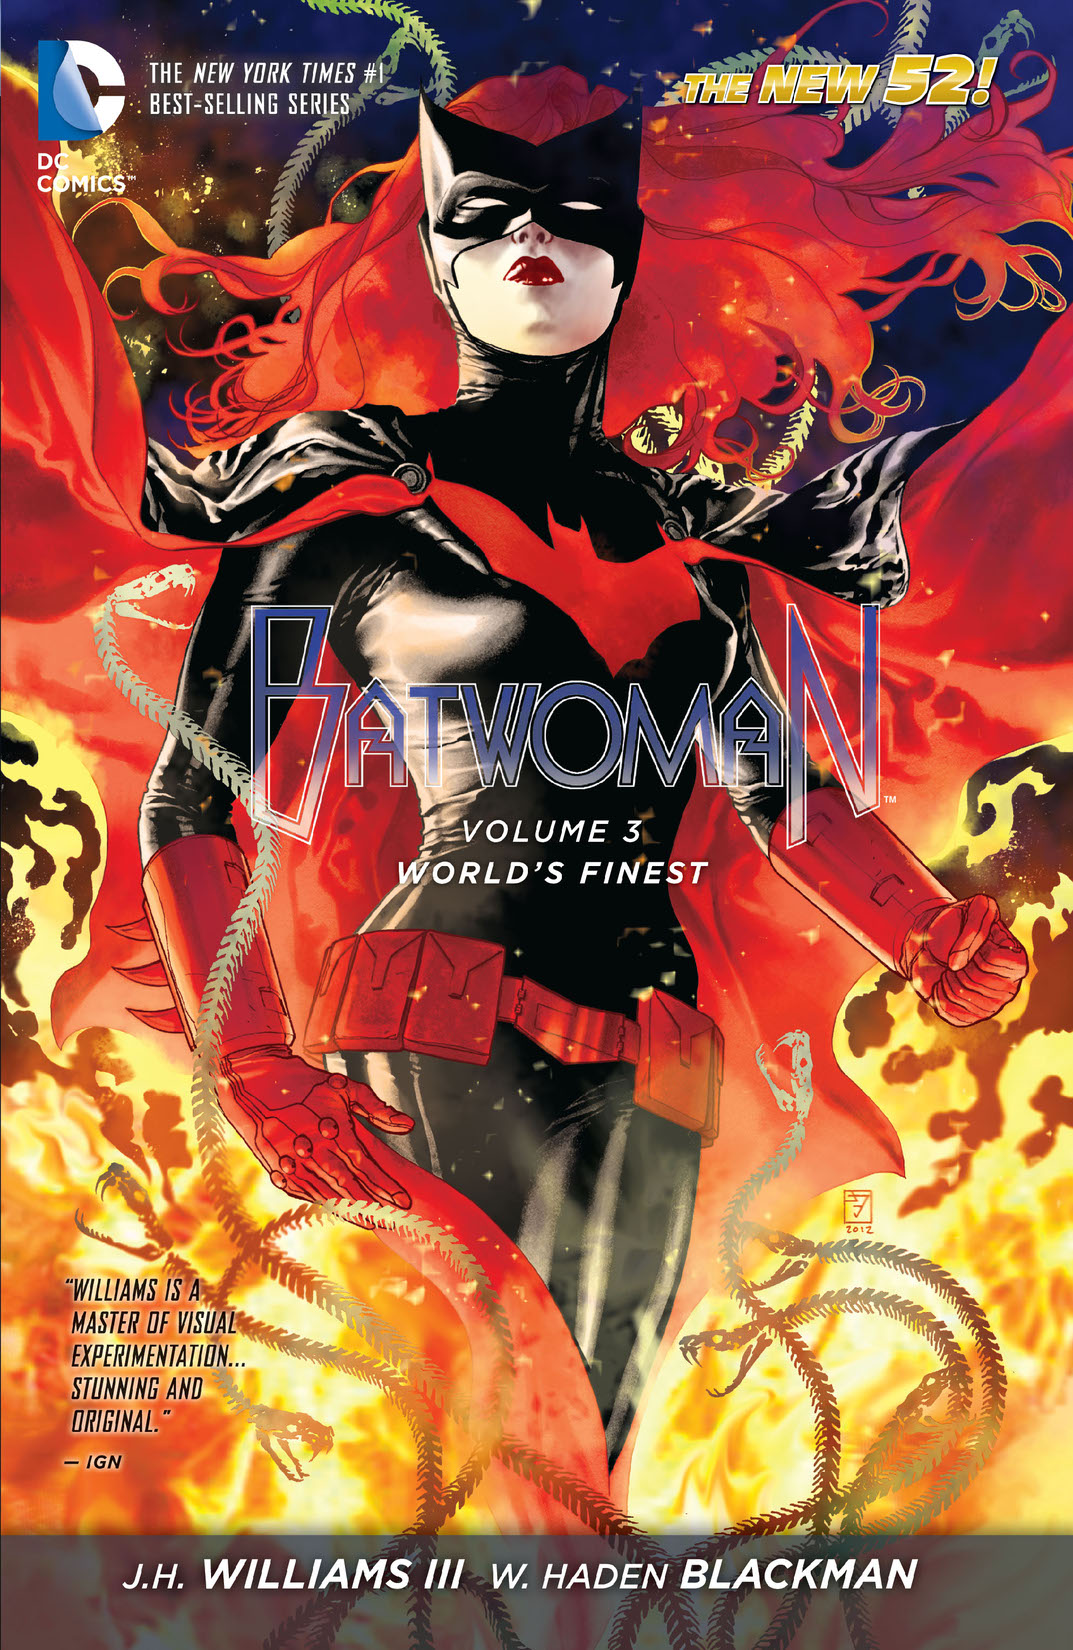 Batwoman Vol. 3: World's Finest preview images